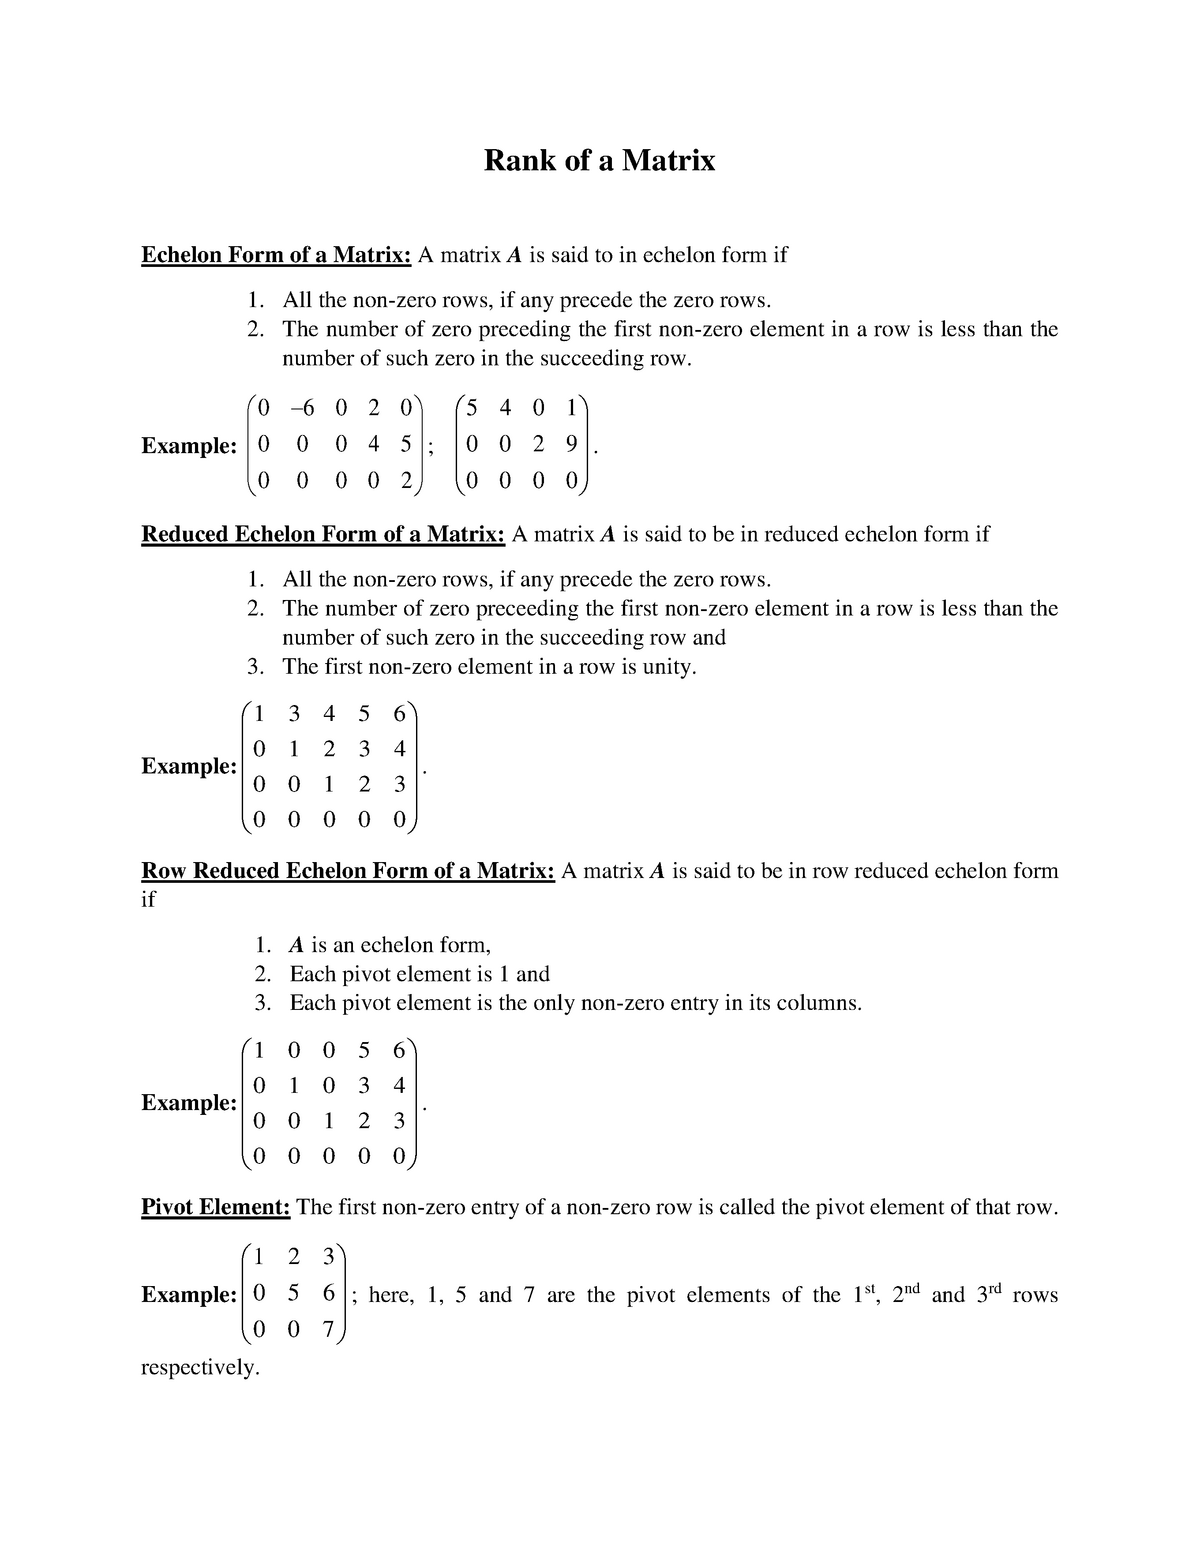 matrix-part-03-new-mathmatics-rank-of-a-matrix-echelon-form-of-a